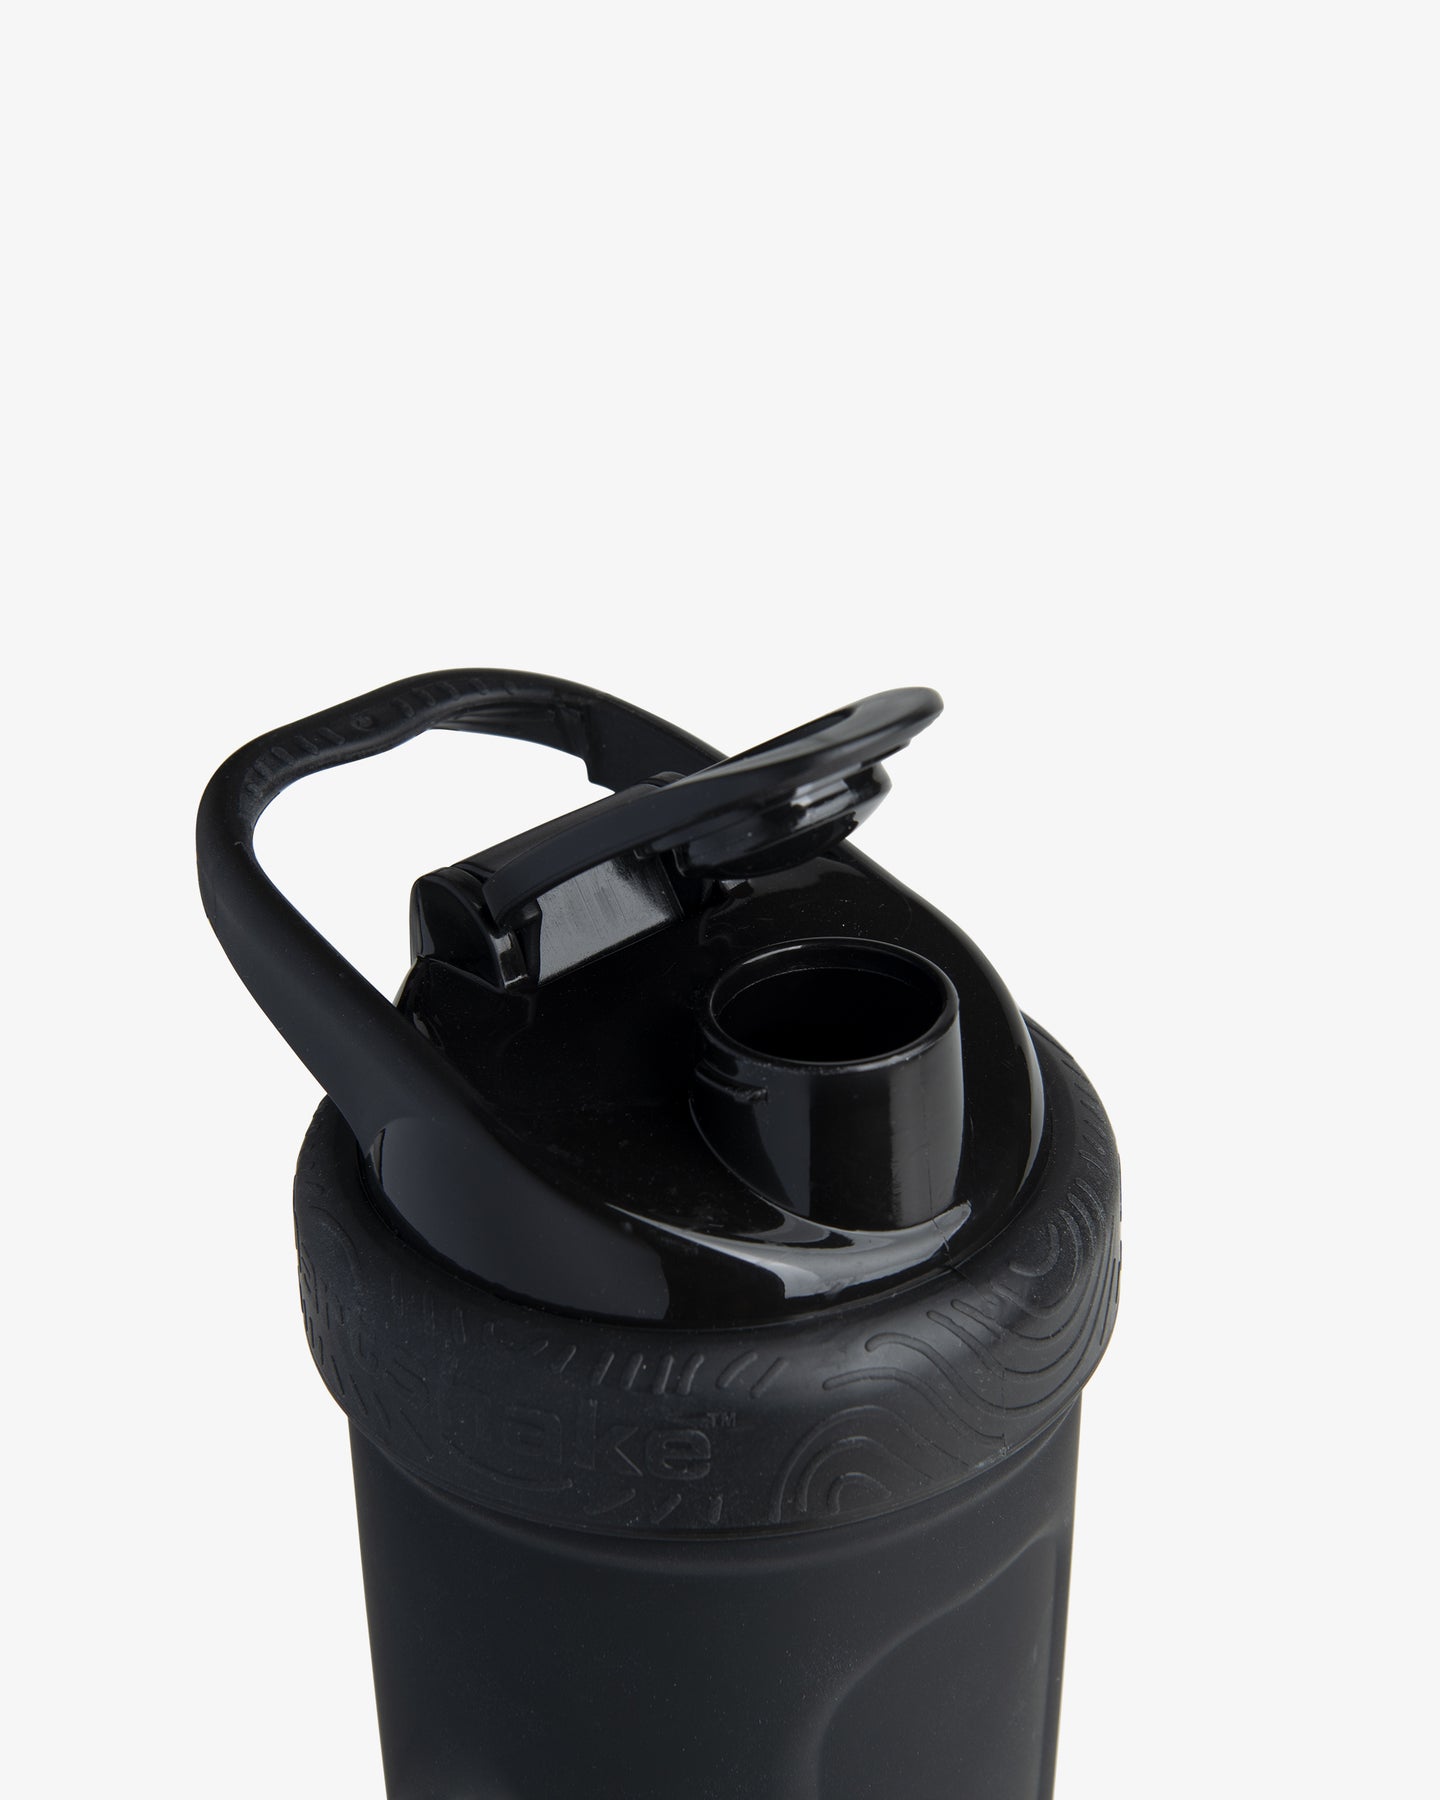 SmartShake Reforce Stainless-Steel Shaker Cup - White